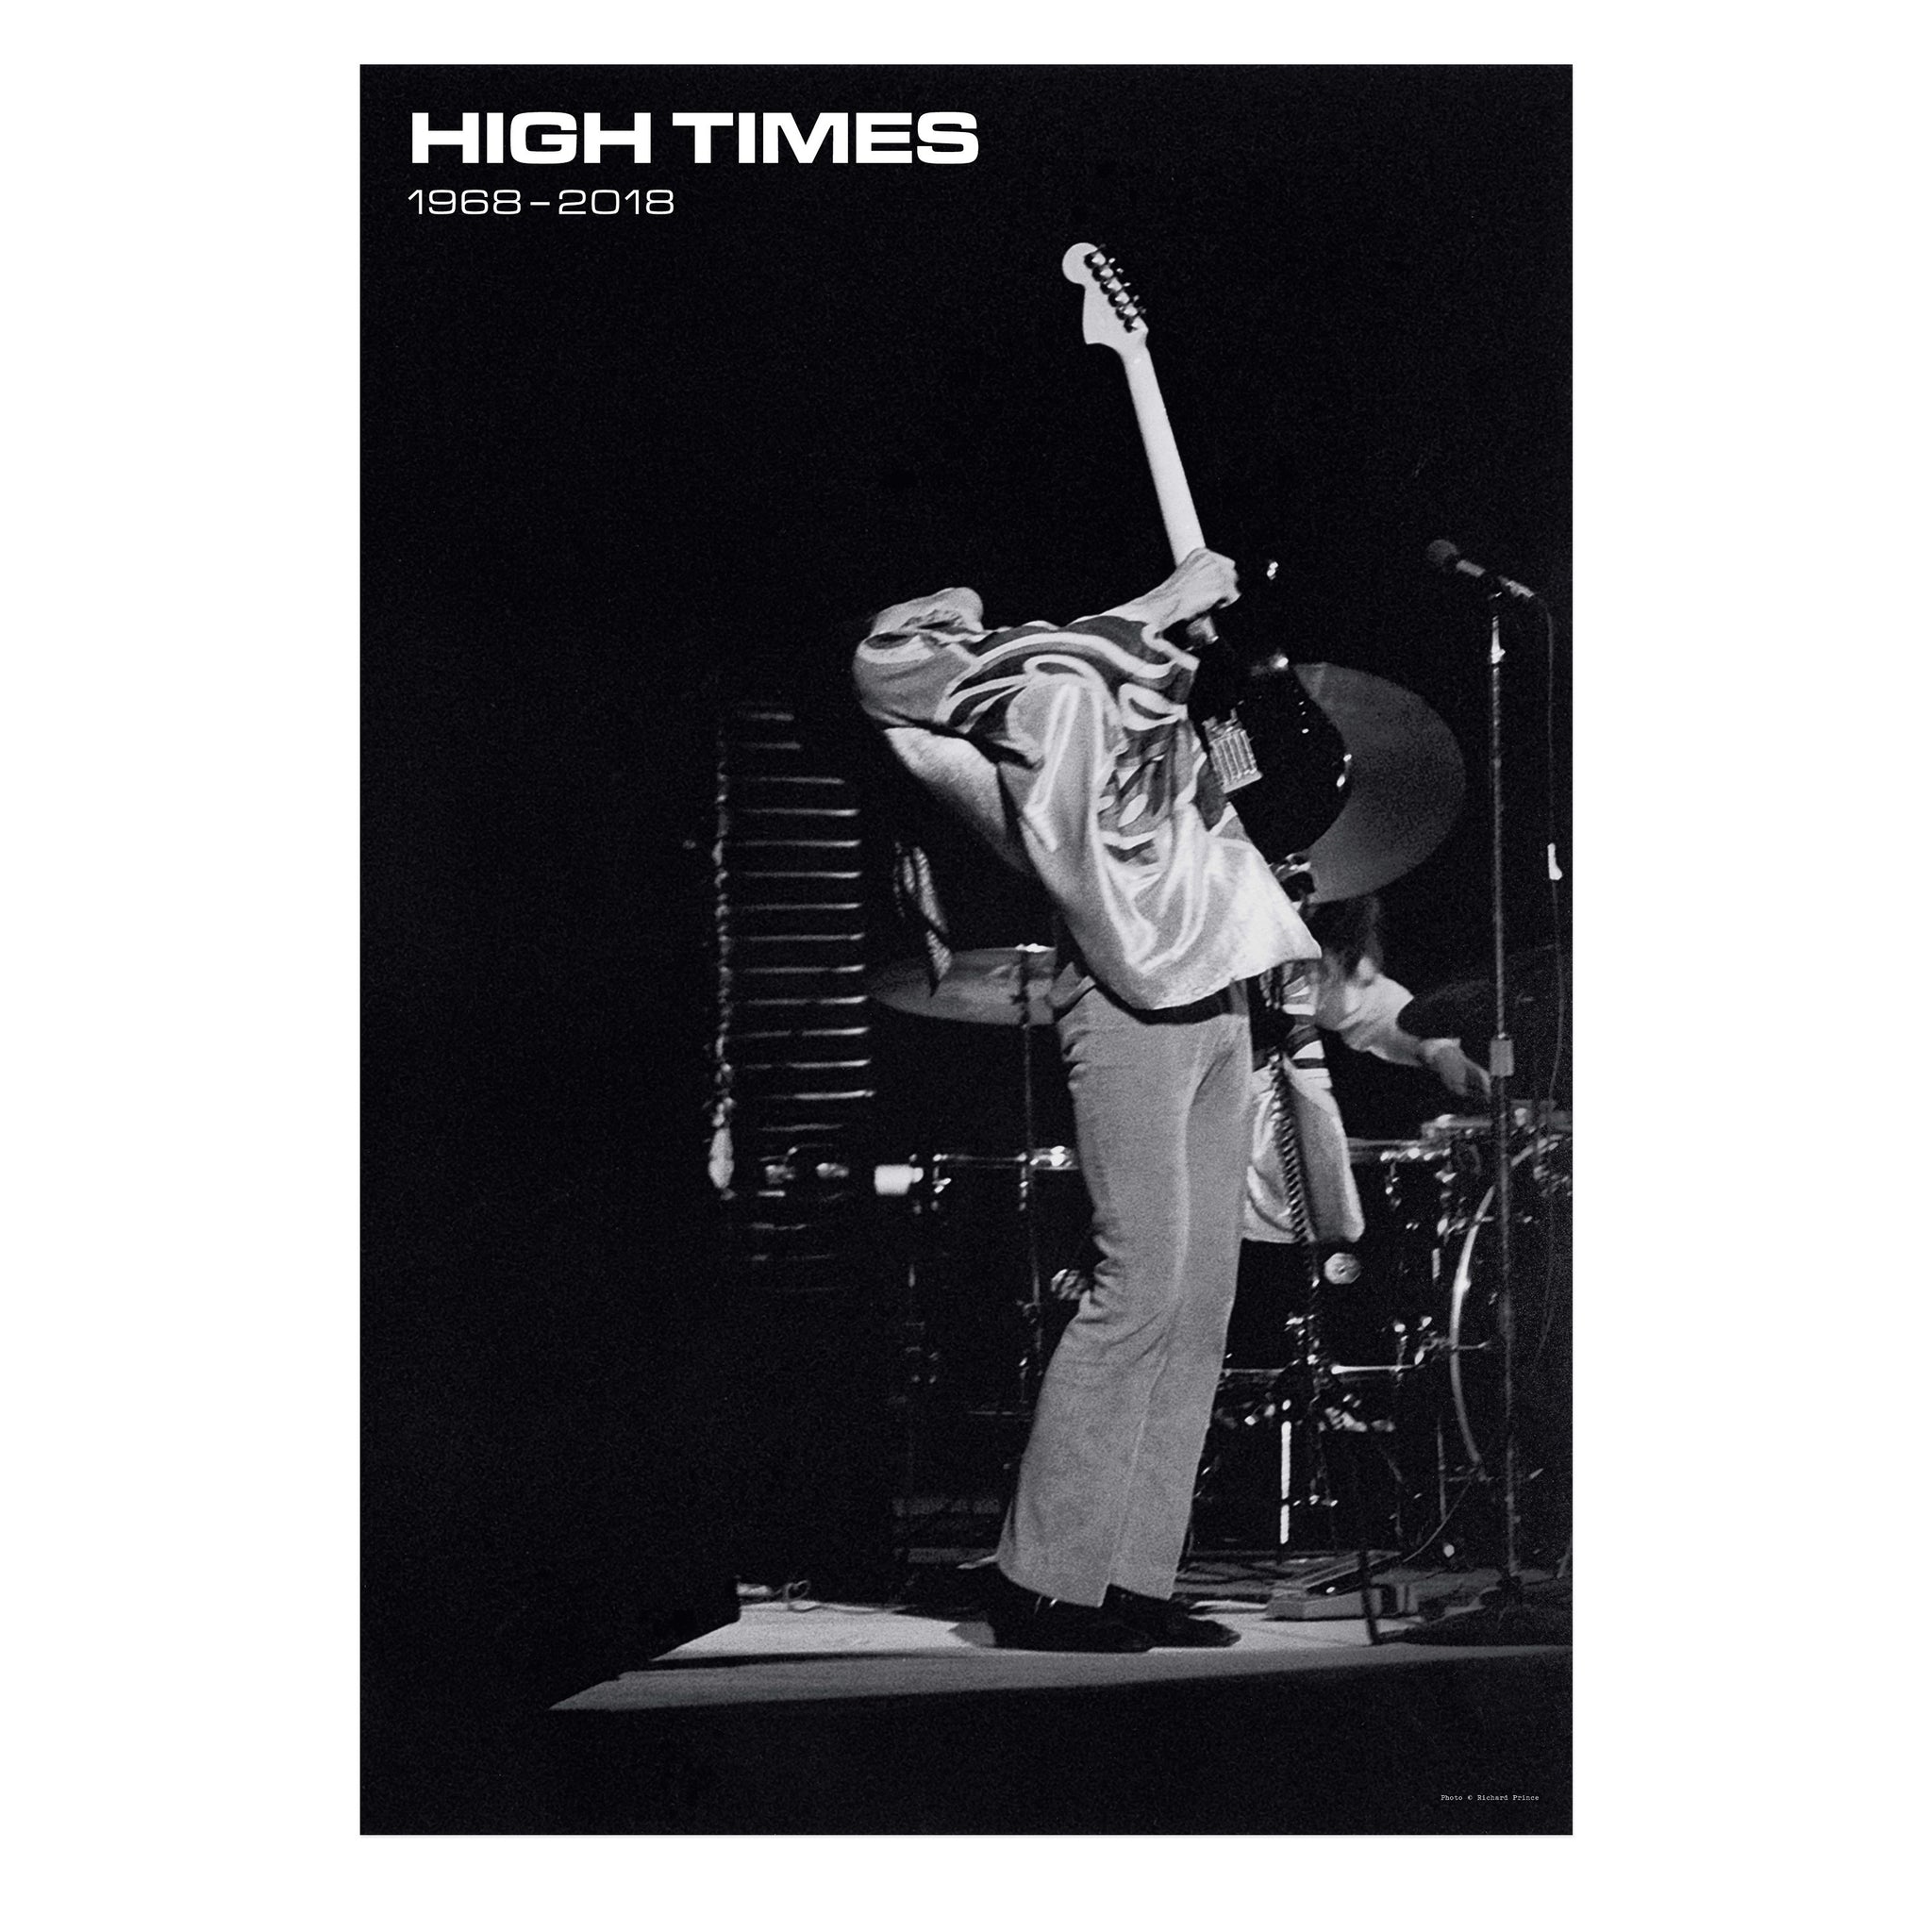 Richard Prince: High Times, depicting a photograph of Jimi Hendrix